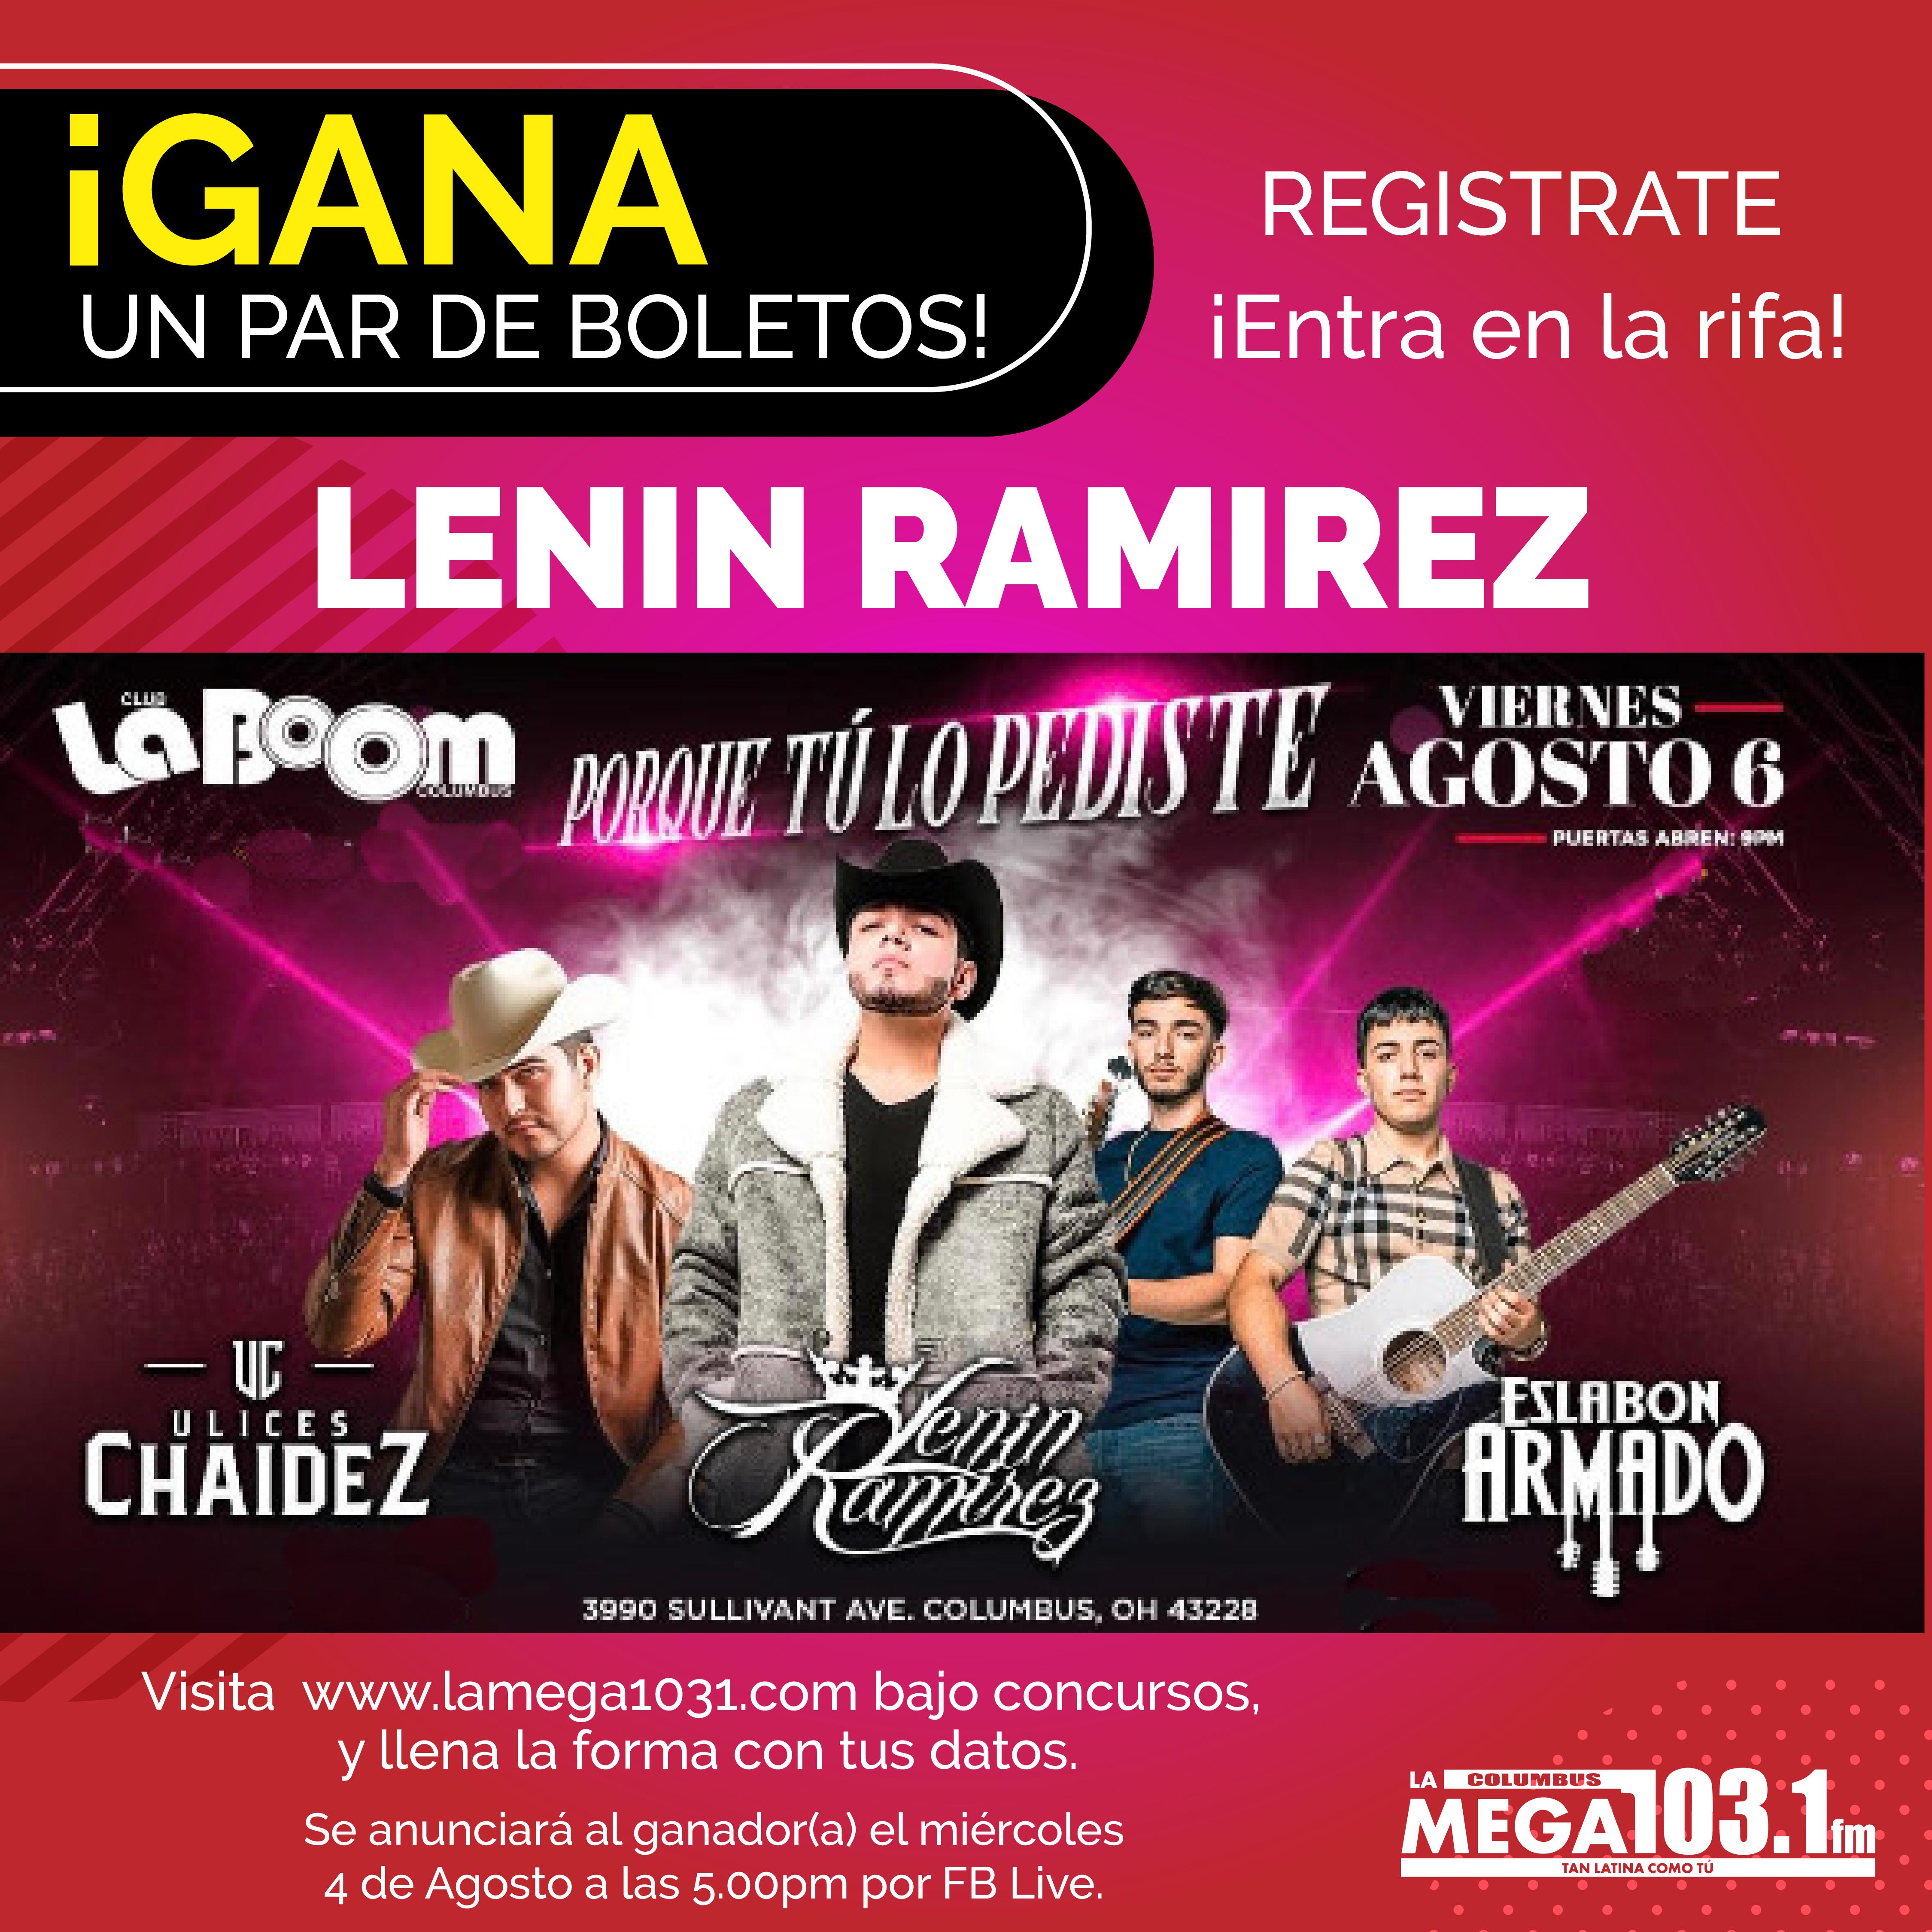 ¡Gana Boletos para Lenin Ramirez!